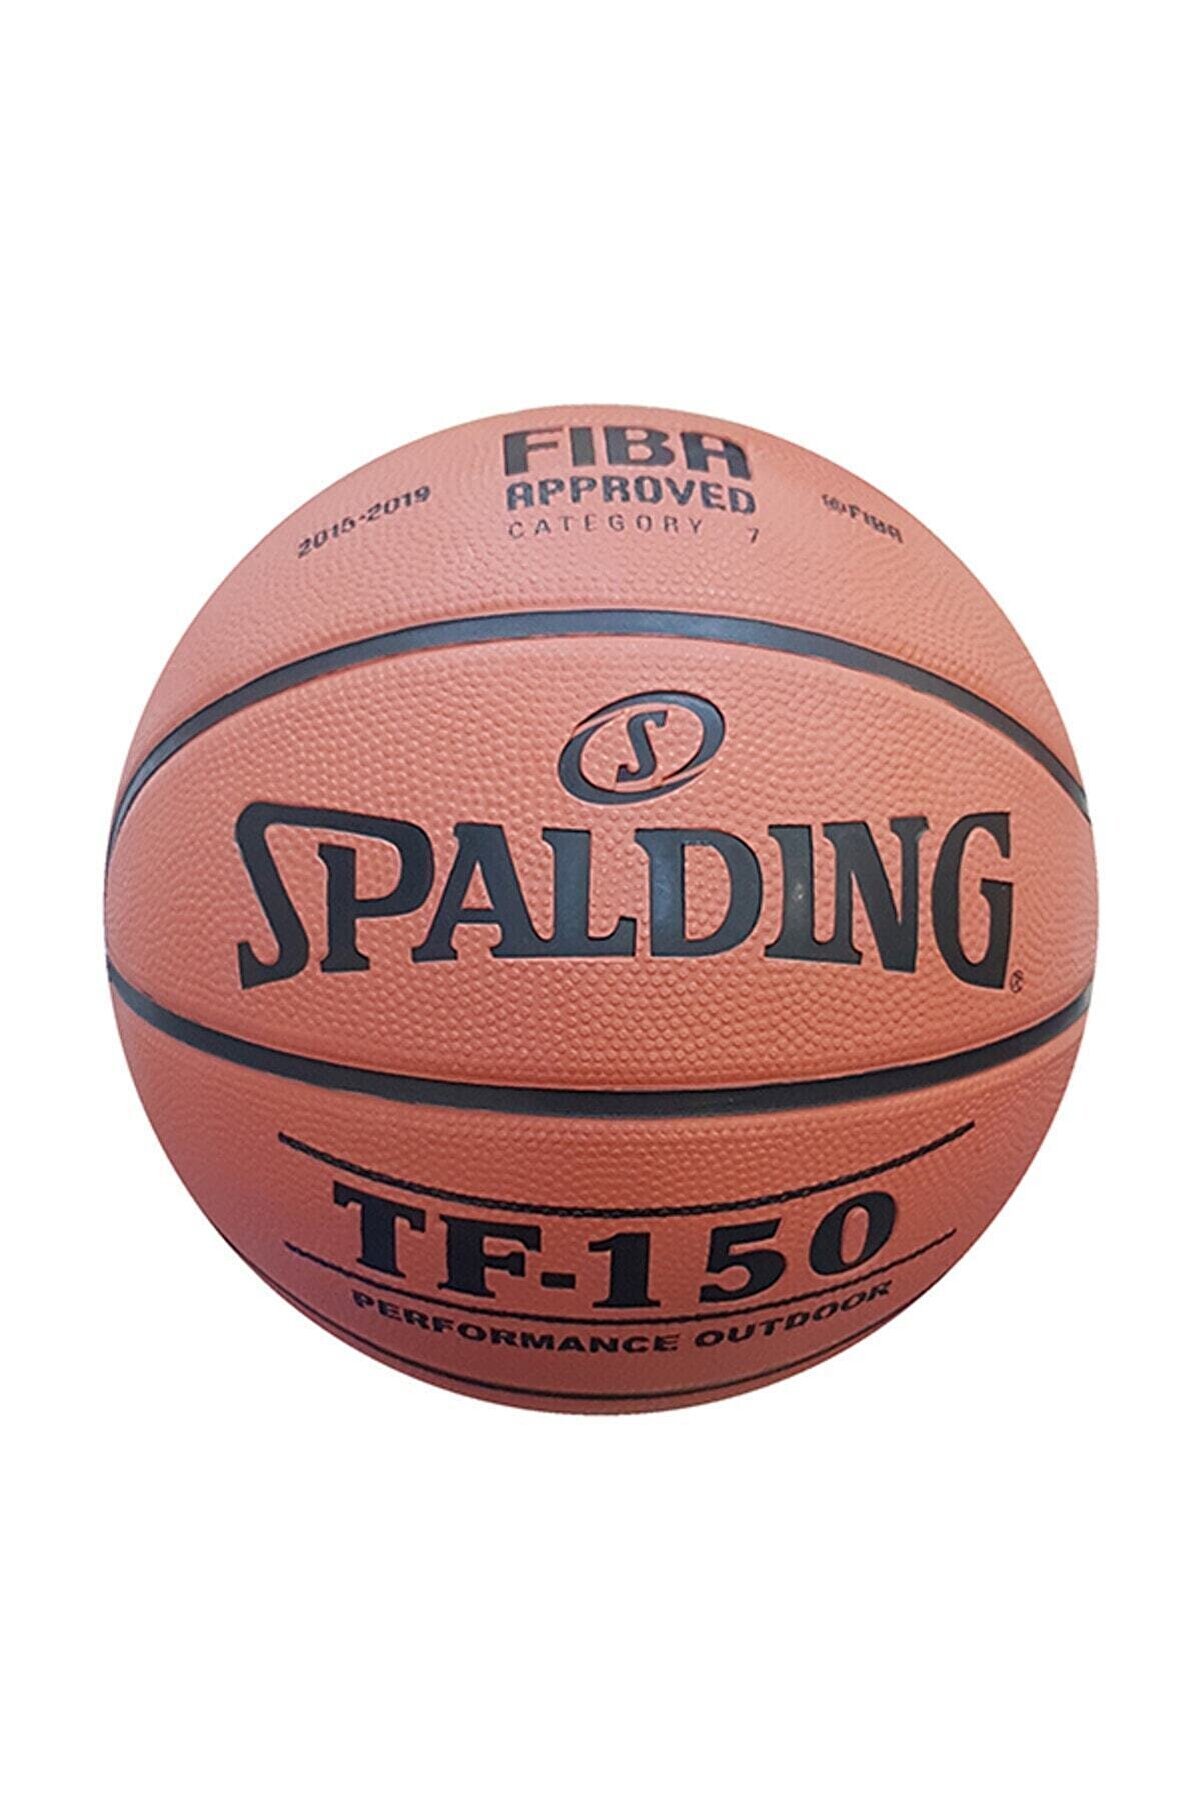 Spalding Tf-150 Basket Topu No:7